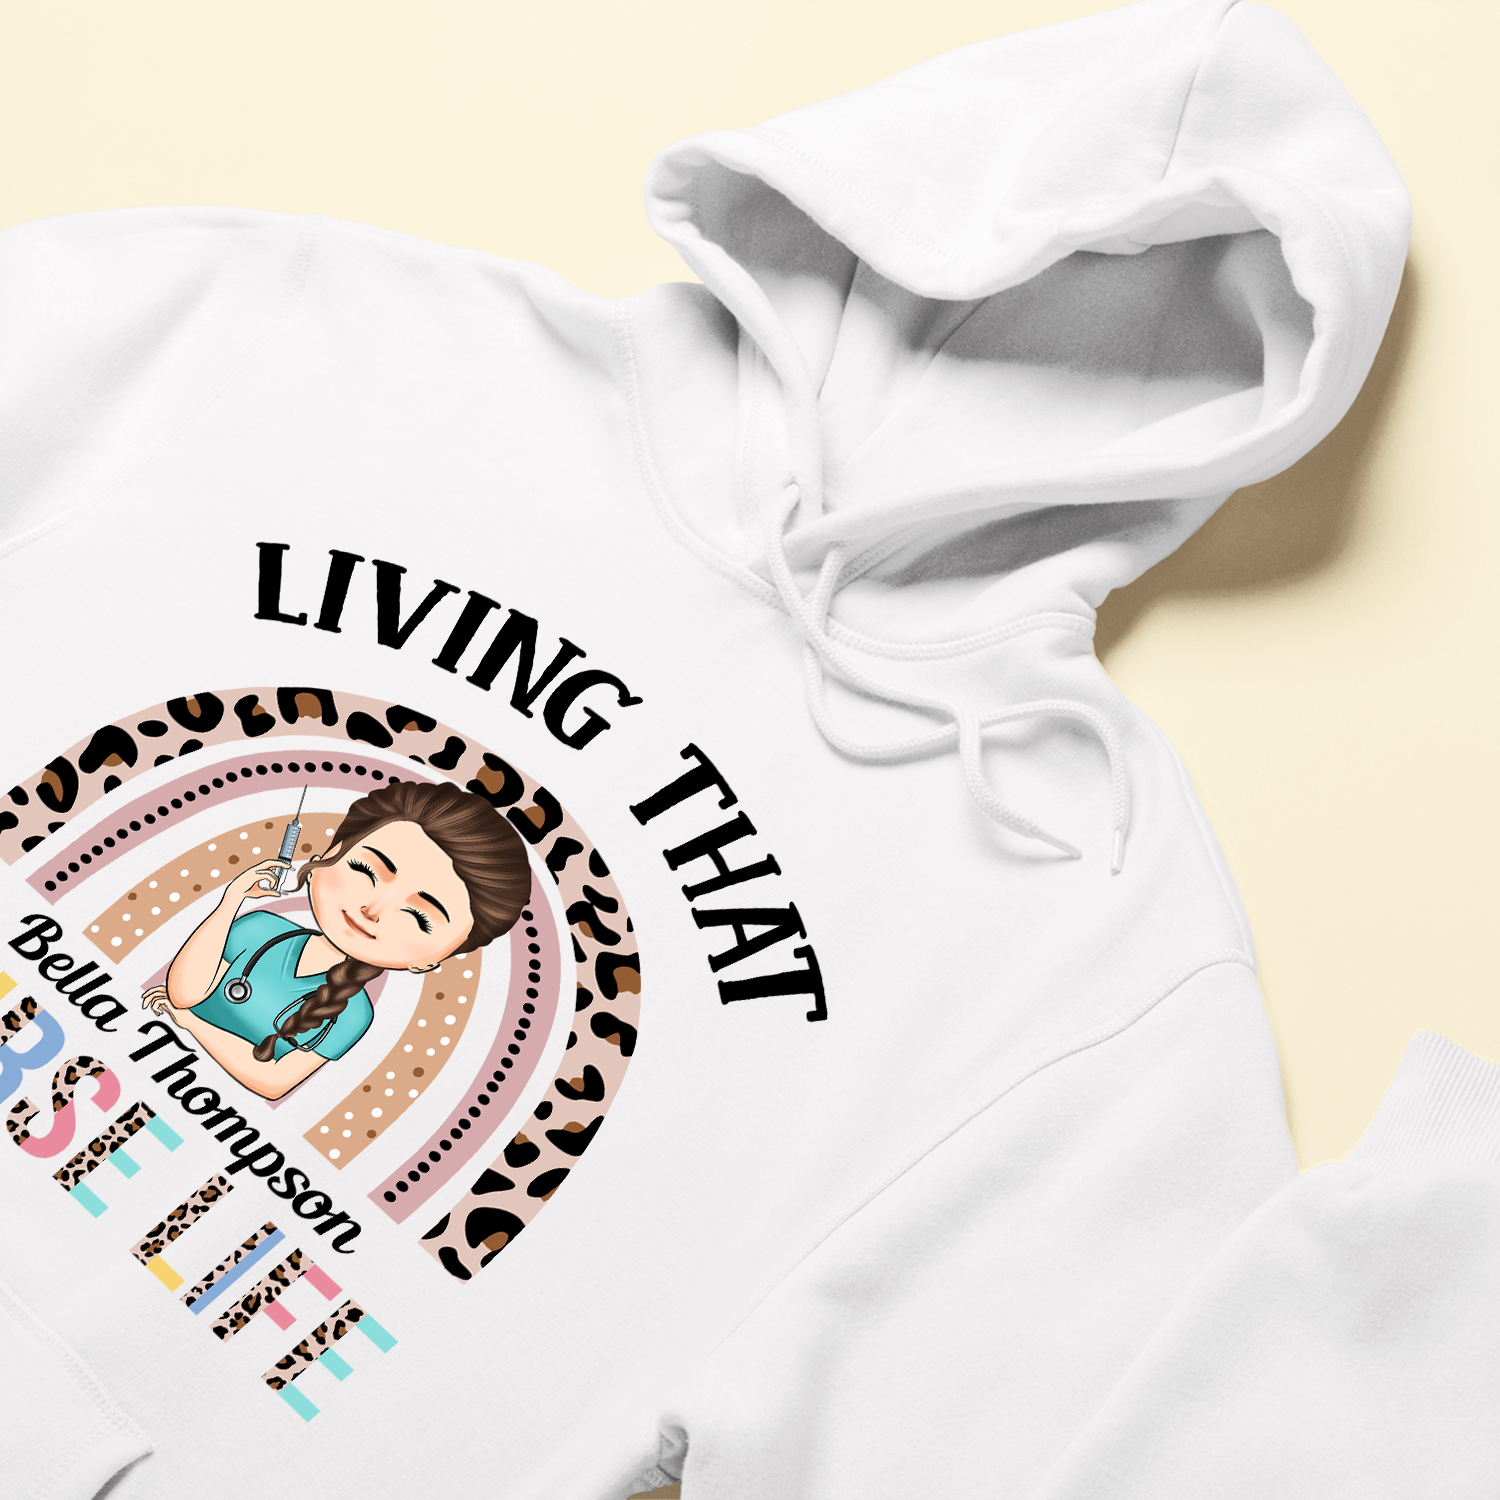 Living That Nurse Life - Personalized Shirt - Birthday Gift For Nurse